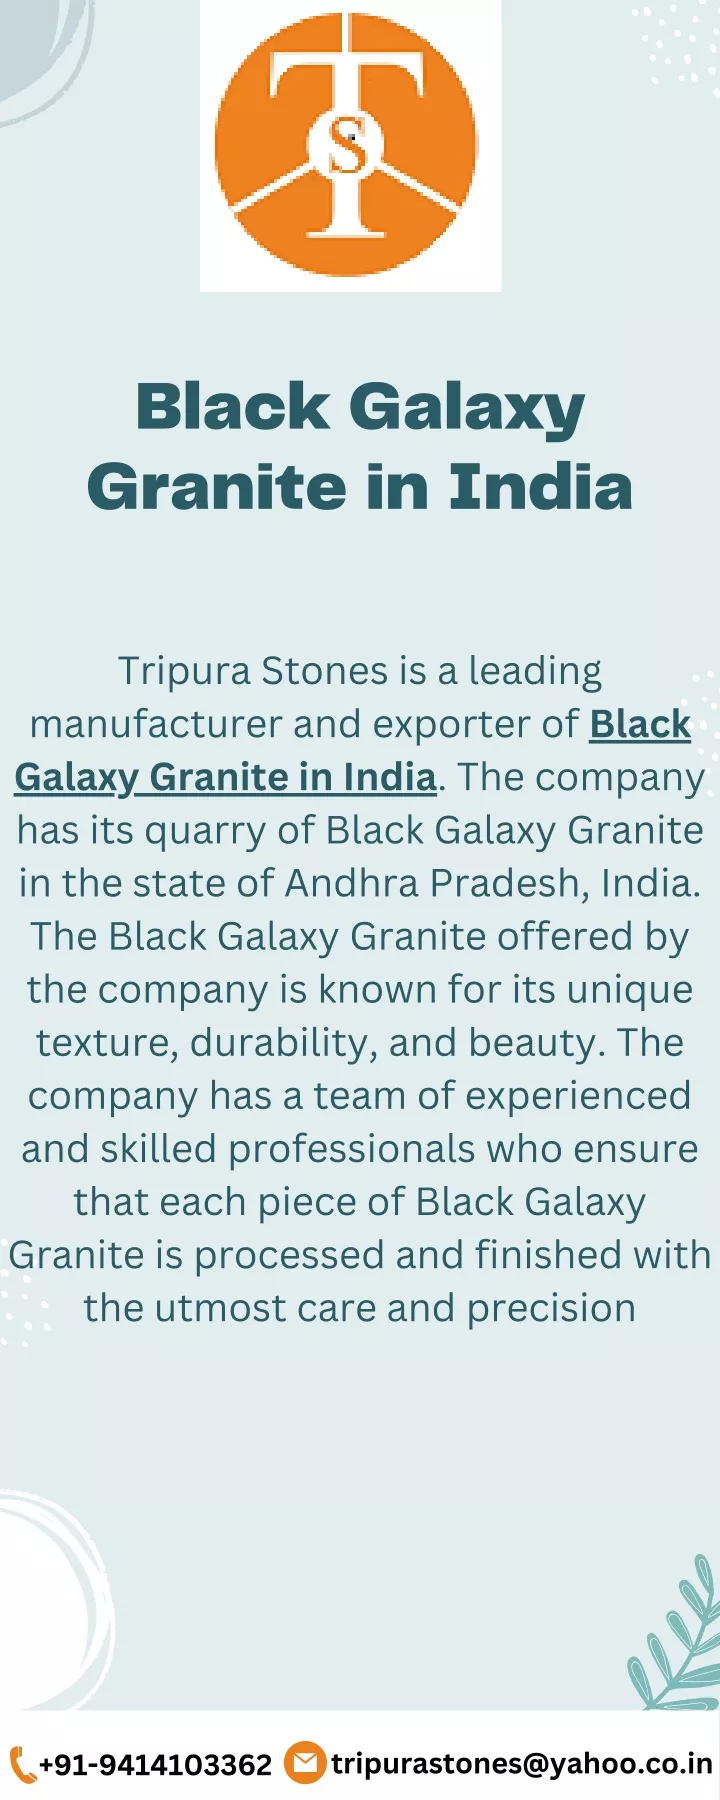 black galaxy granite in india